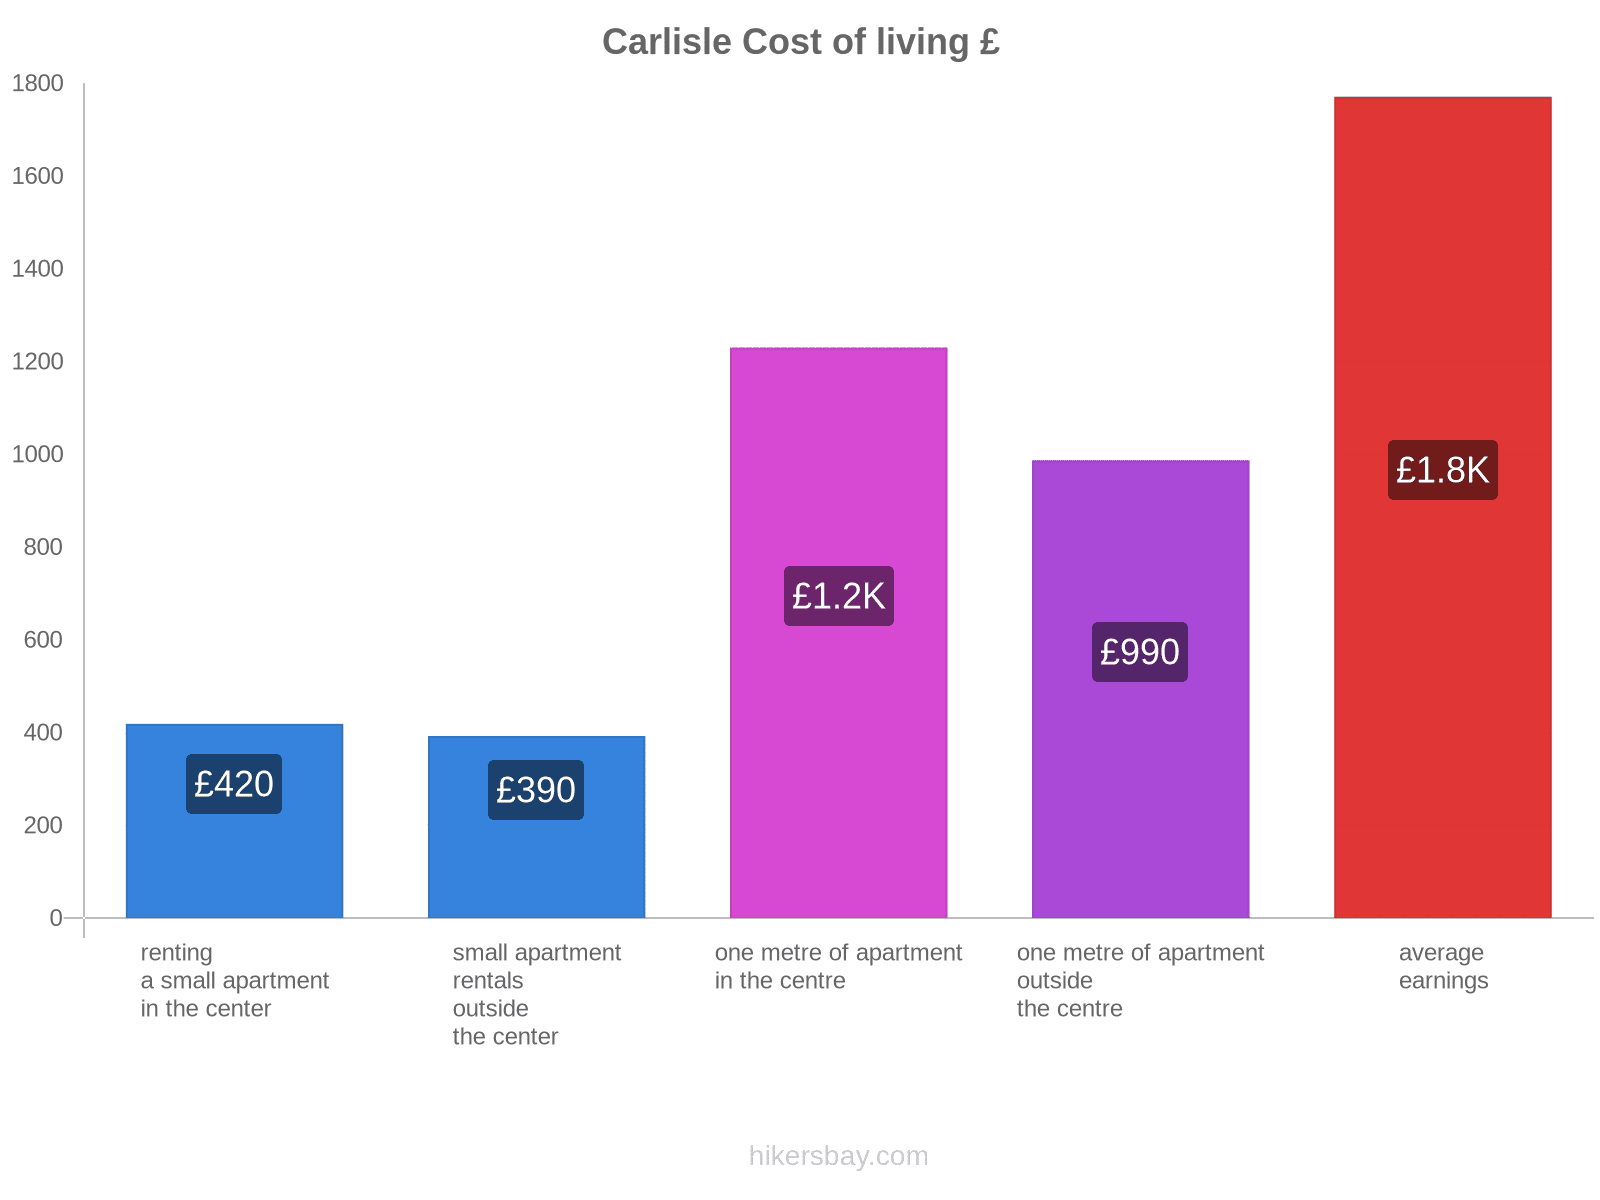 Carlisle cost of living hikersbay.com